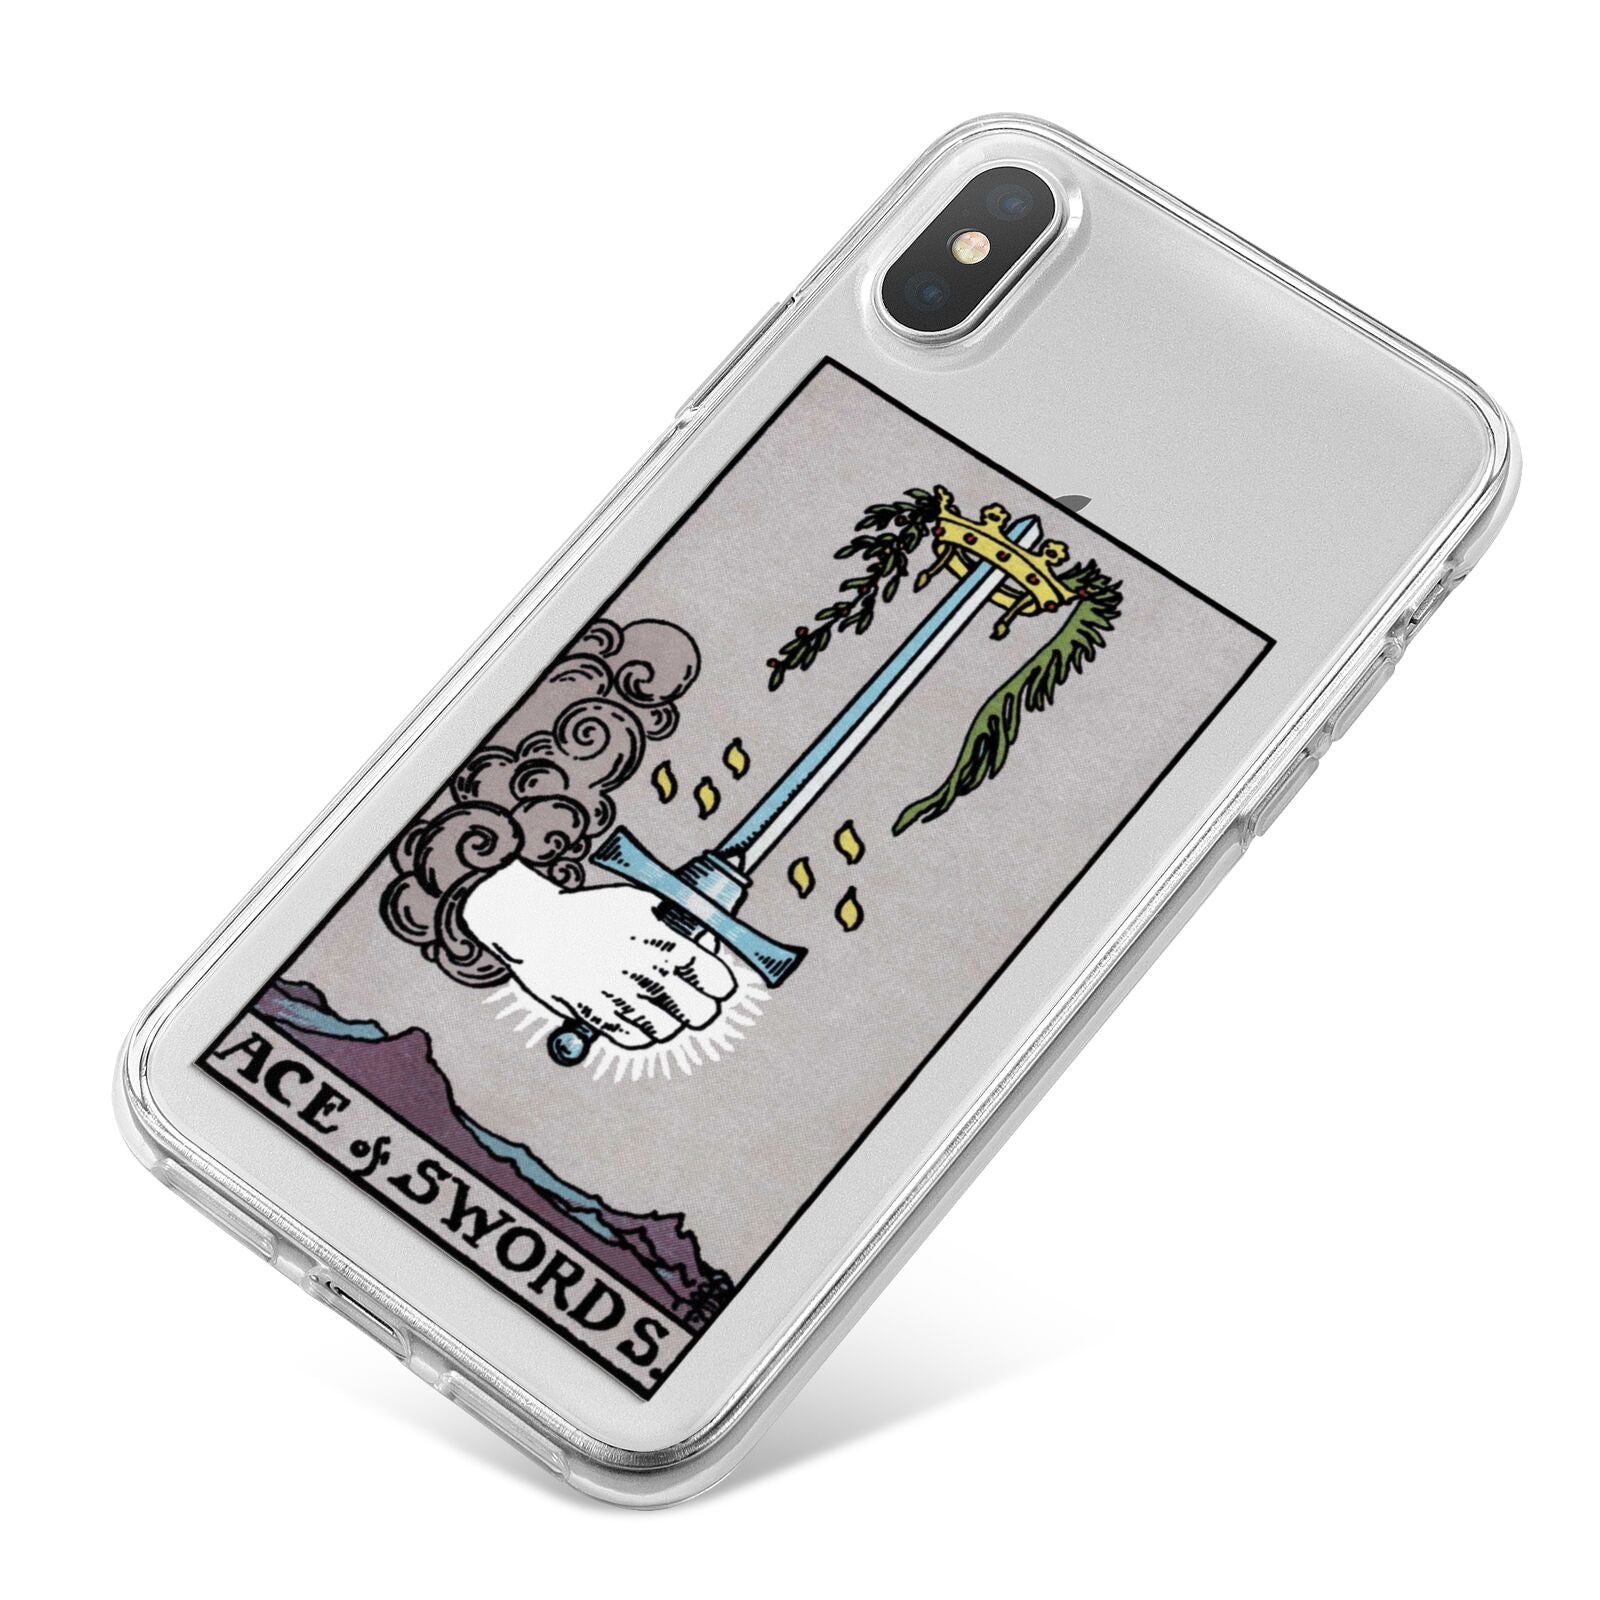 Ace of Swords Tarot Card iPhone X Bumper Case on Silver iPhone